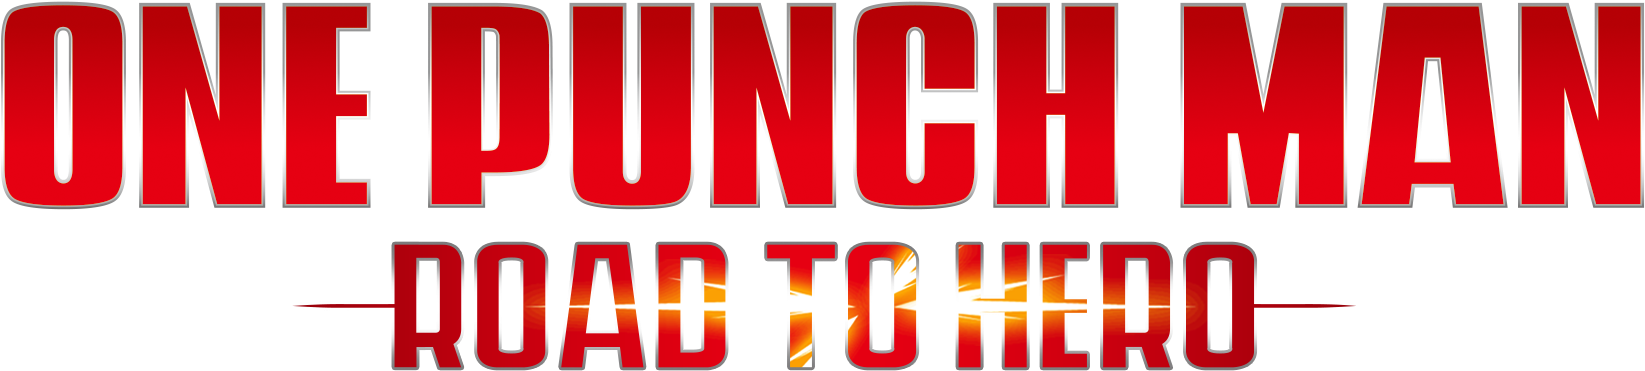 One Punch Man Road To Hero Logo PNG image